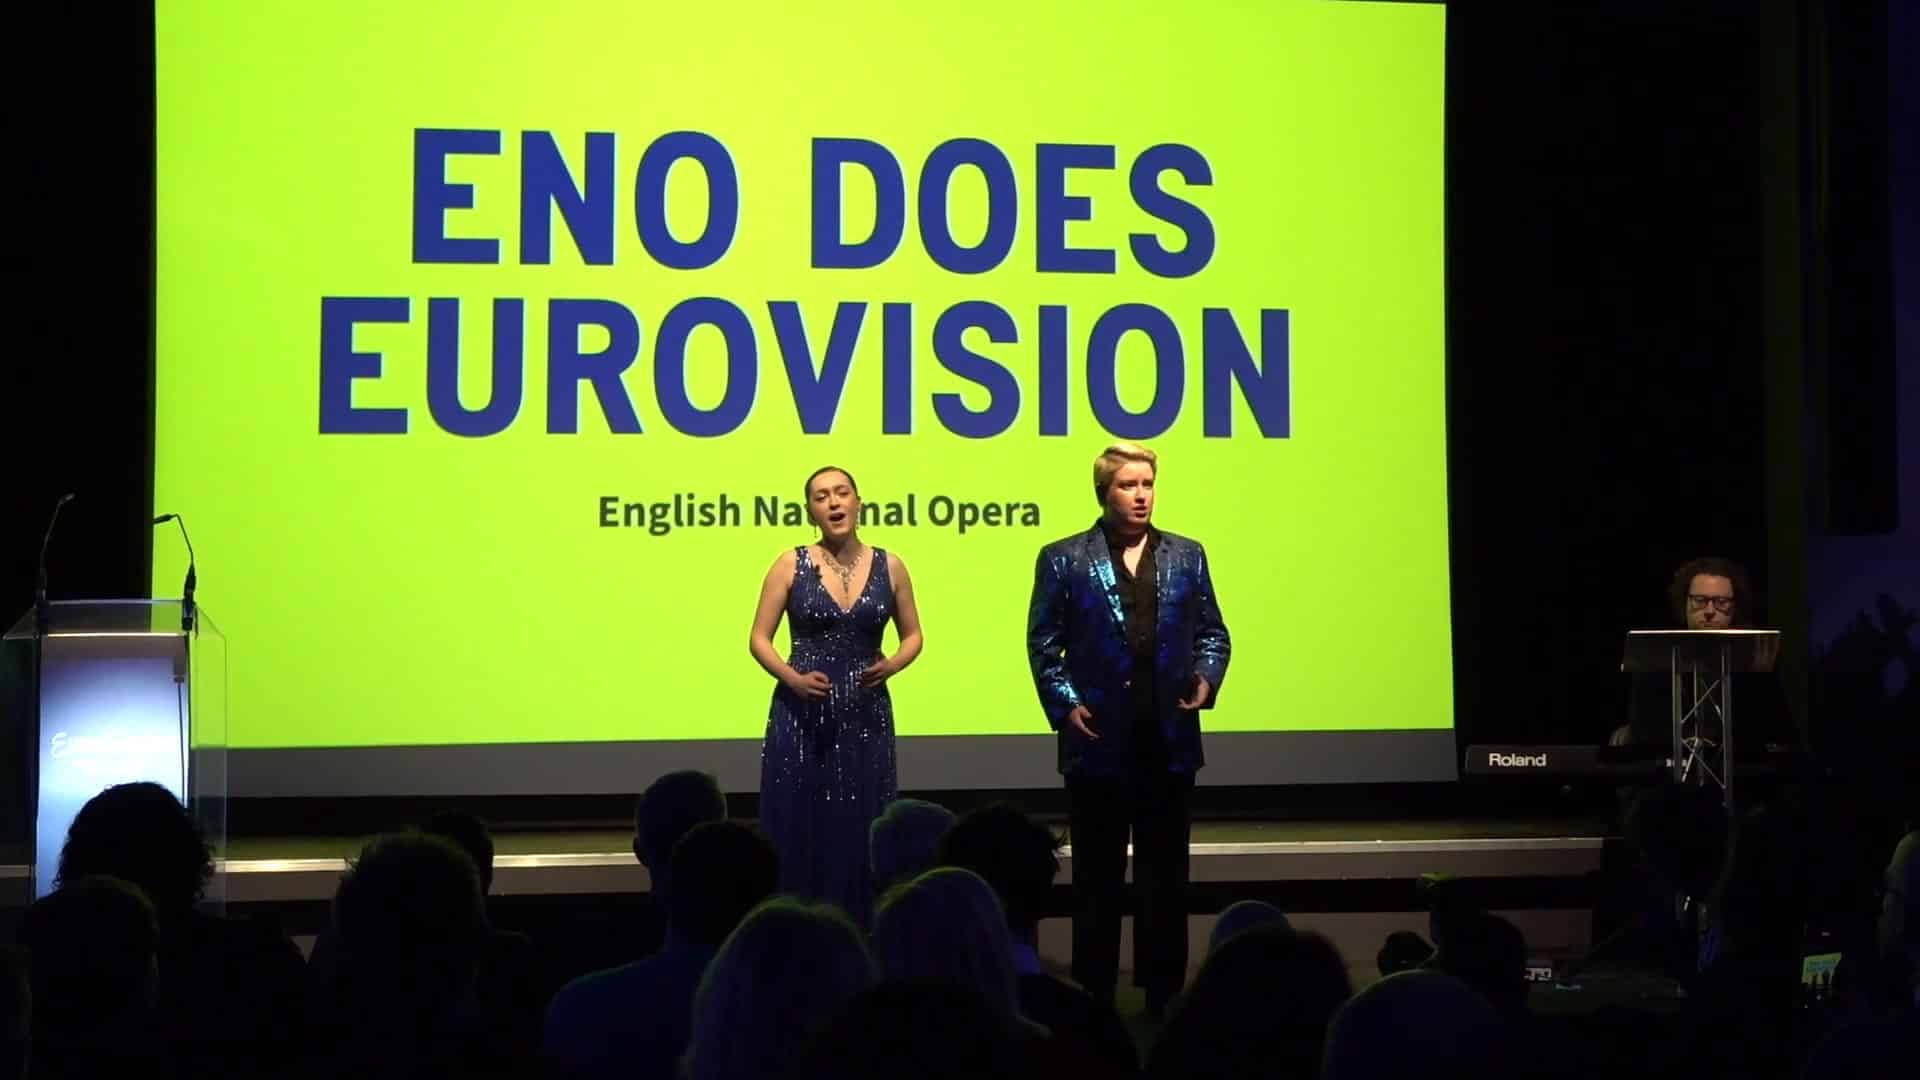 English National opera embraces Eurovision